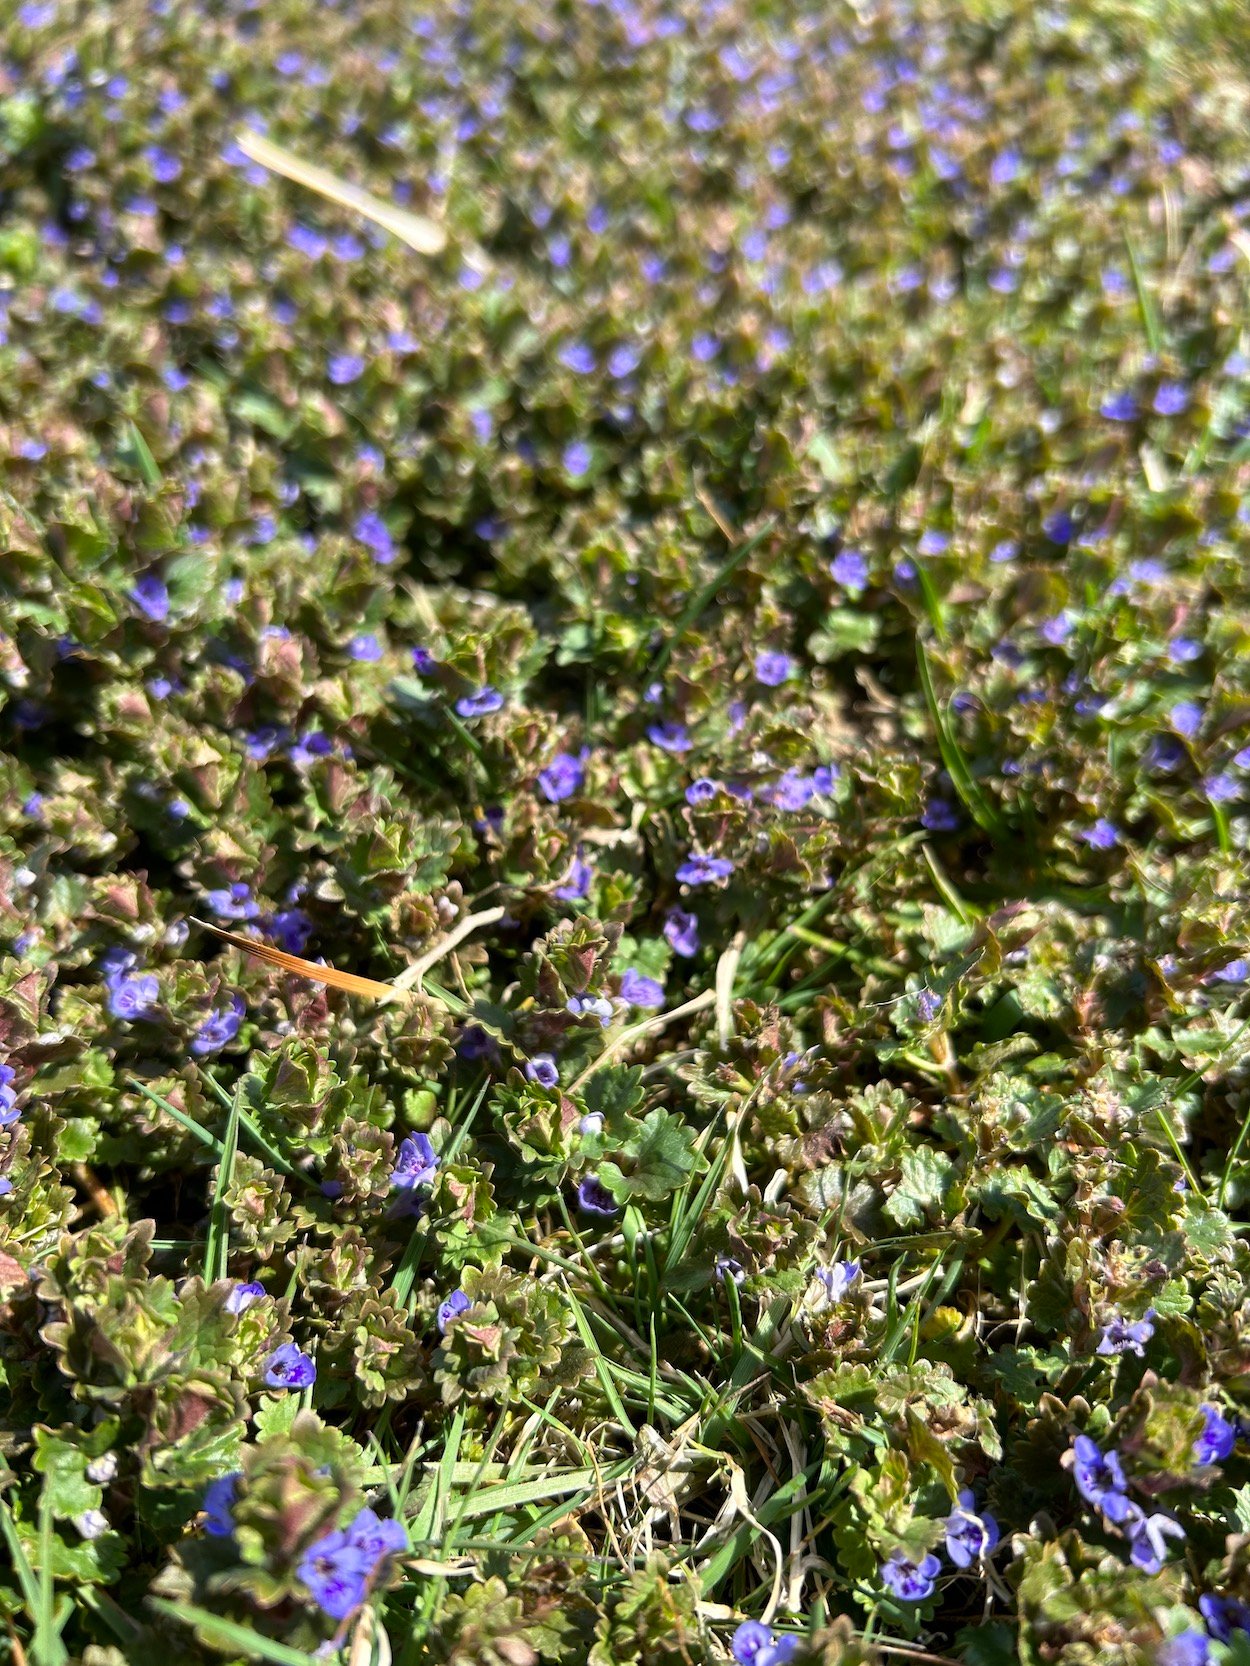 Close up og ground ivy in lawn